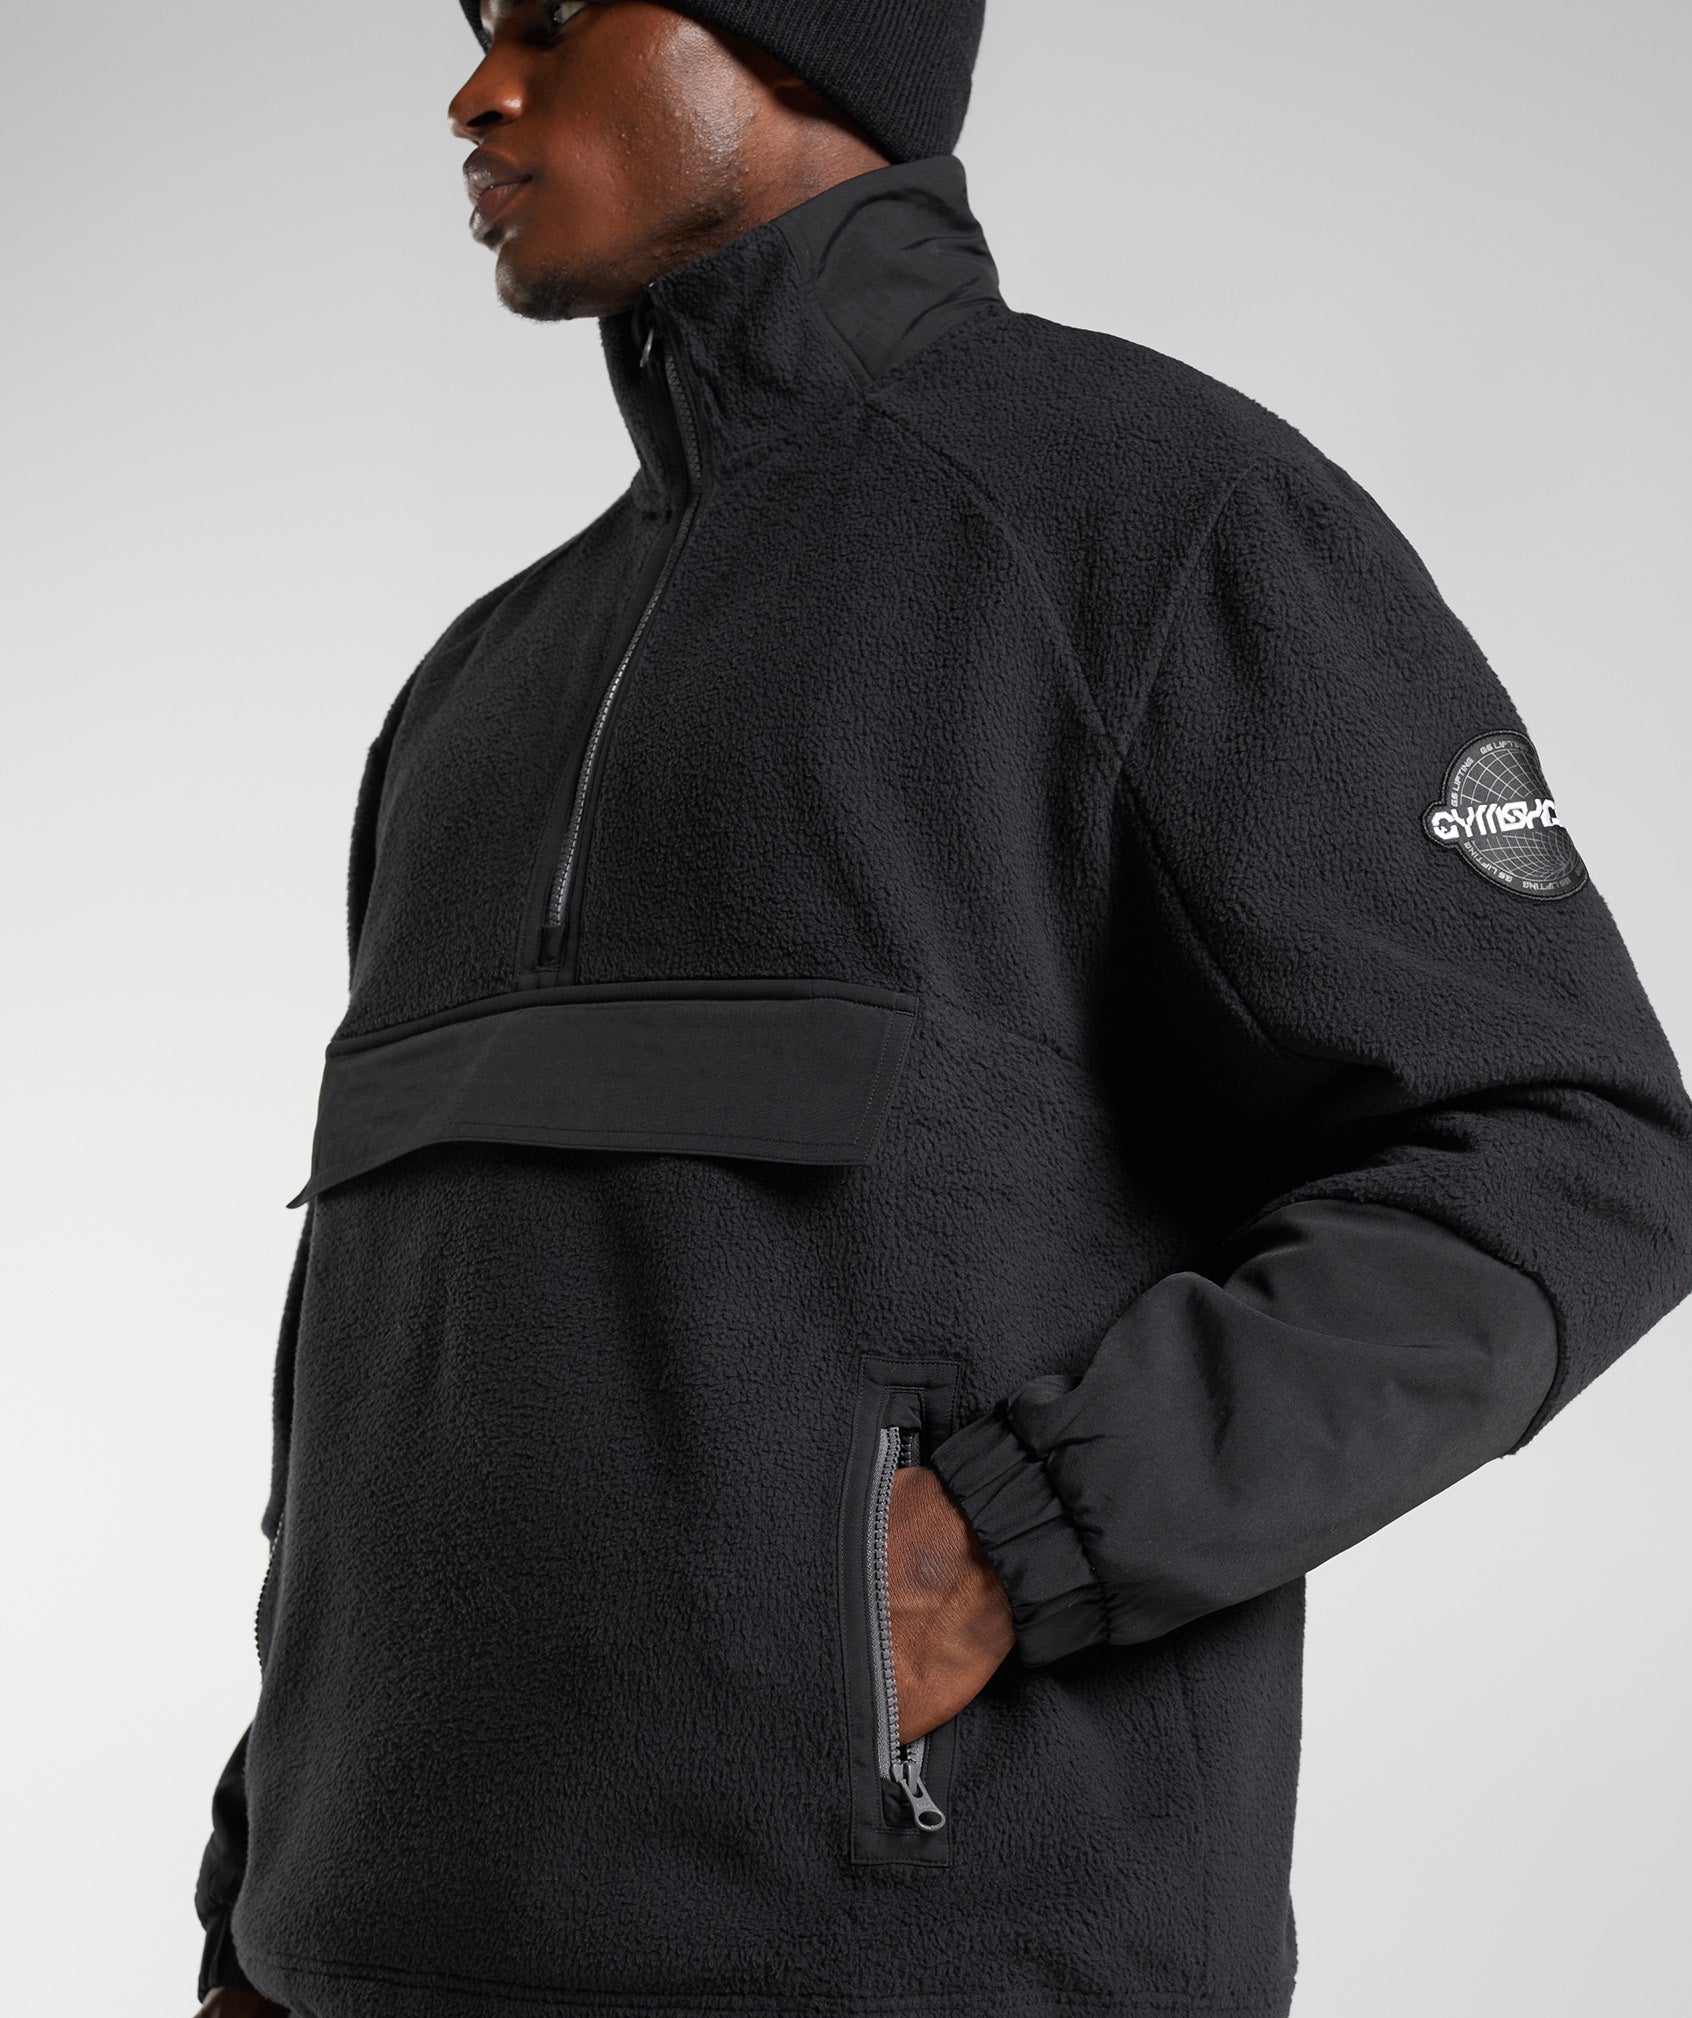 Gymshark Thermal Fleece 1/4 Zip Pullover - Black/Pitch Grey